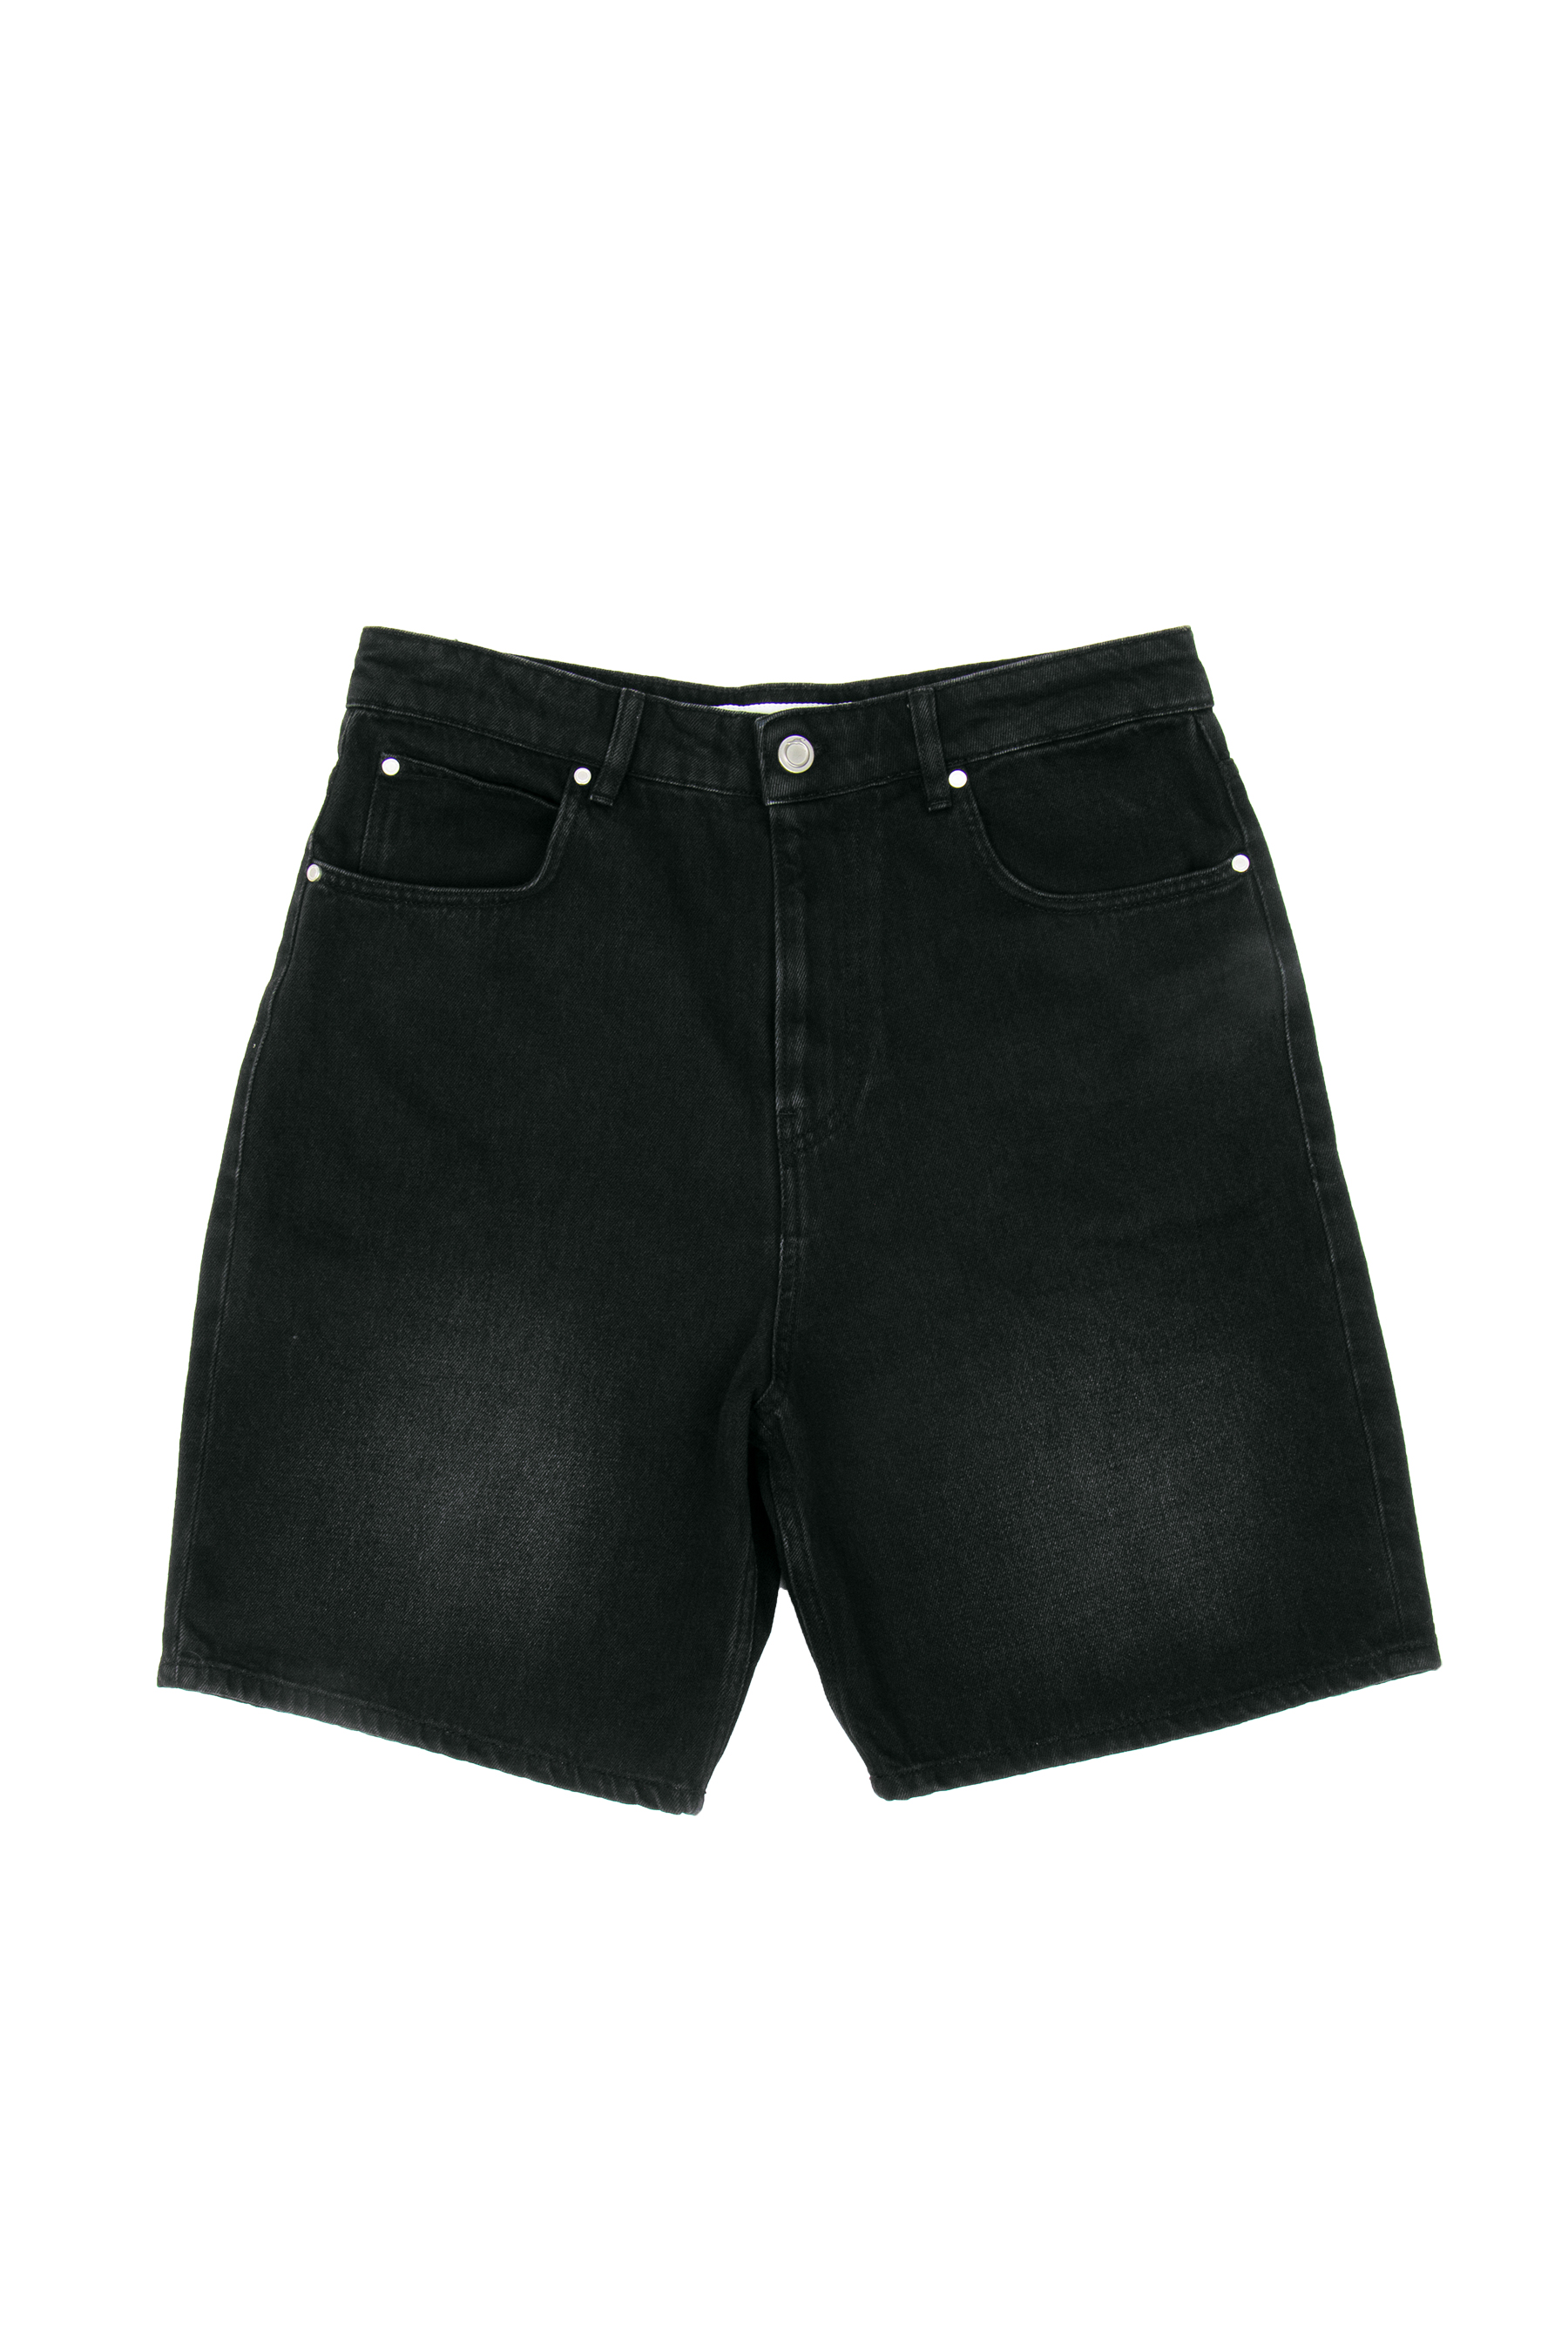 TRUSSARDI Denim Baggy Shorts | Shorts | Jeans & Pants | Clothing | Men ...